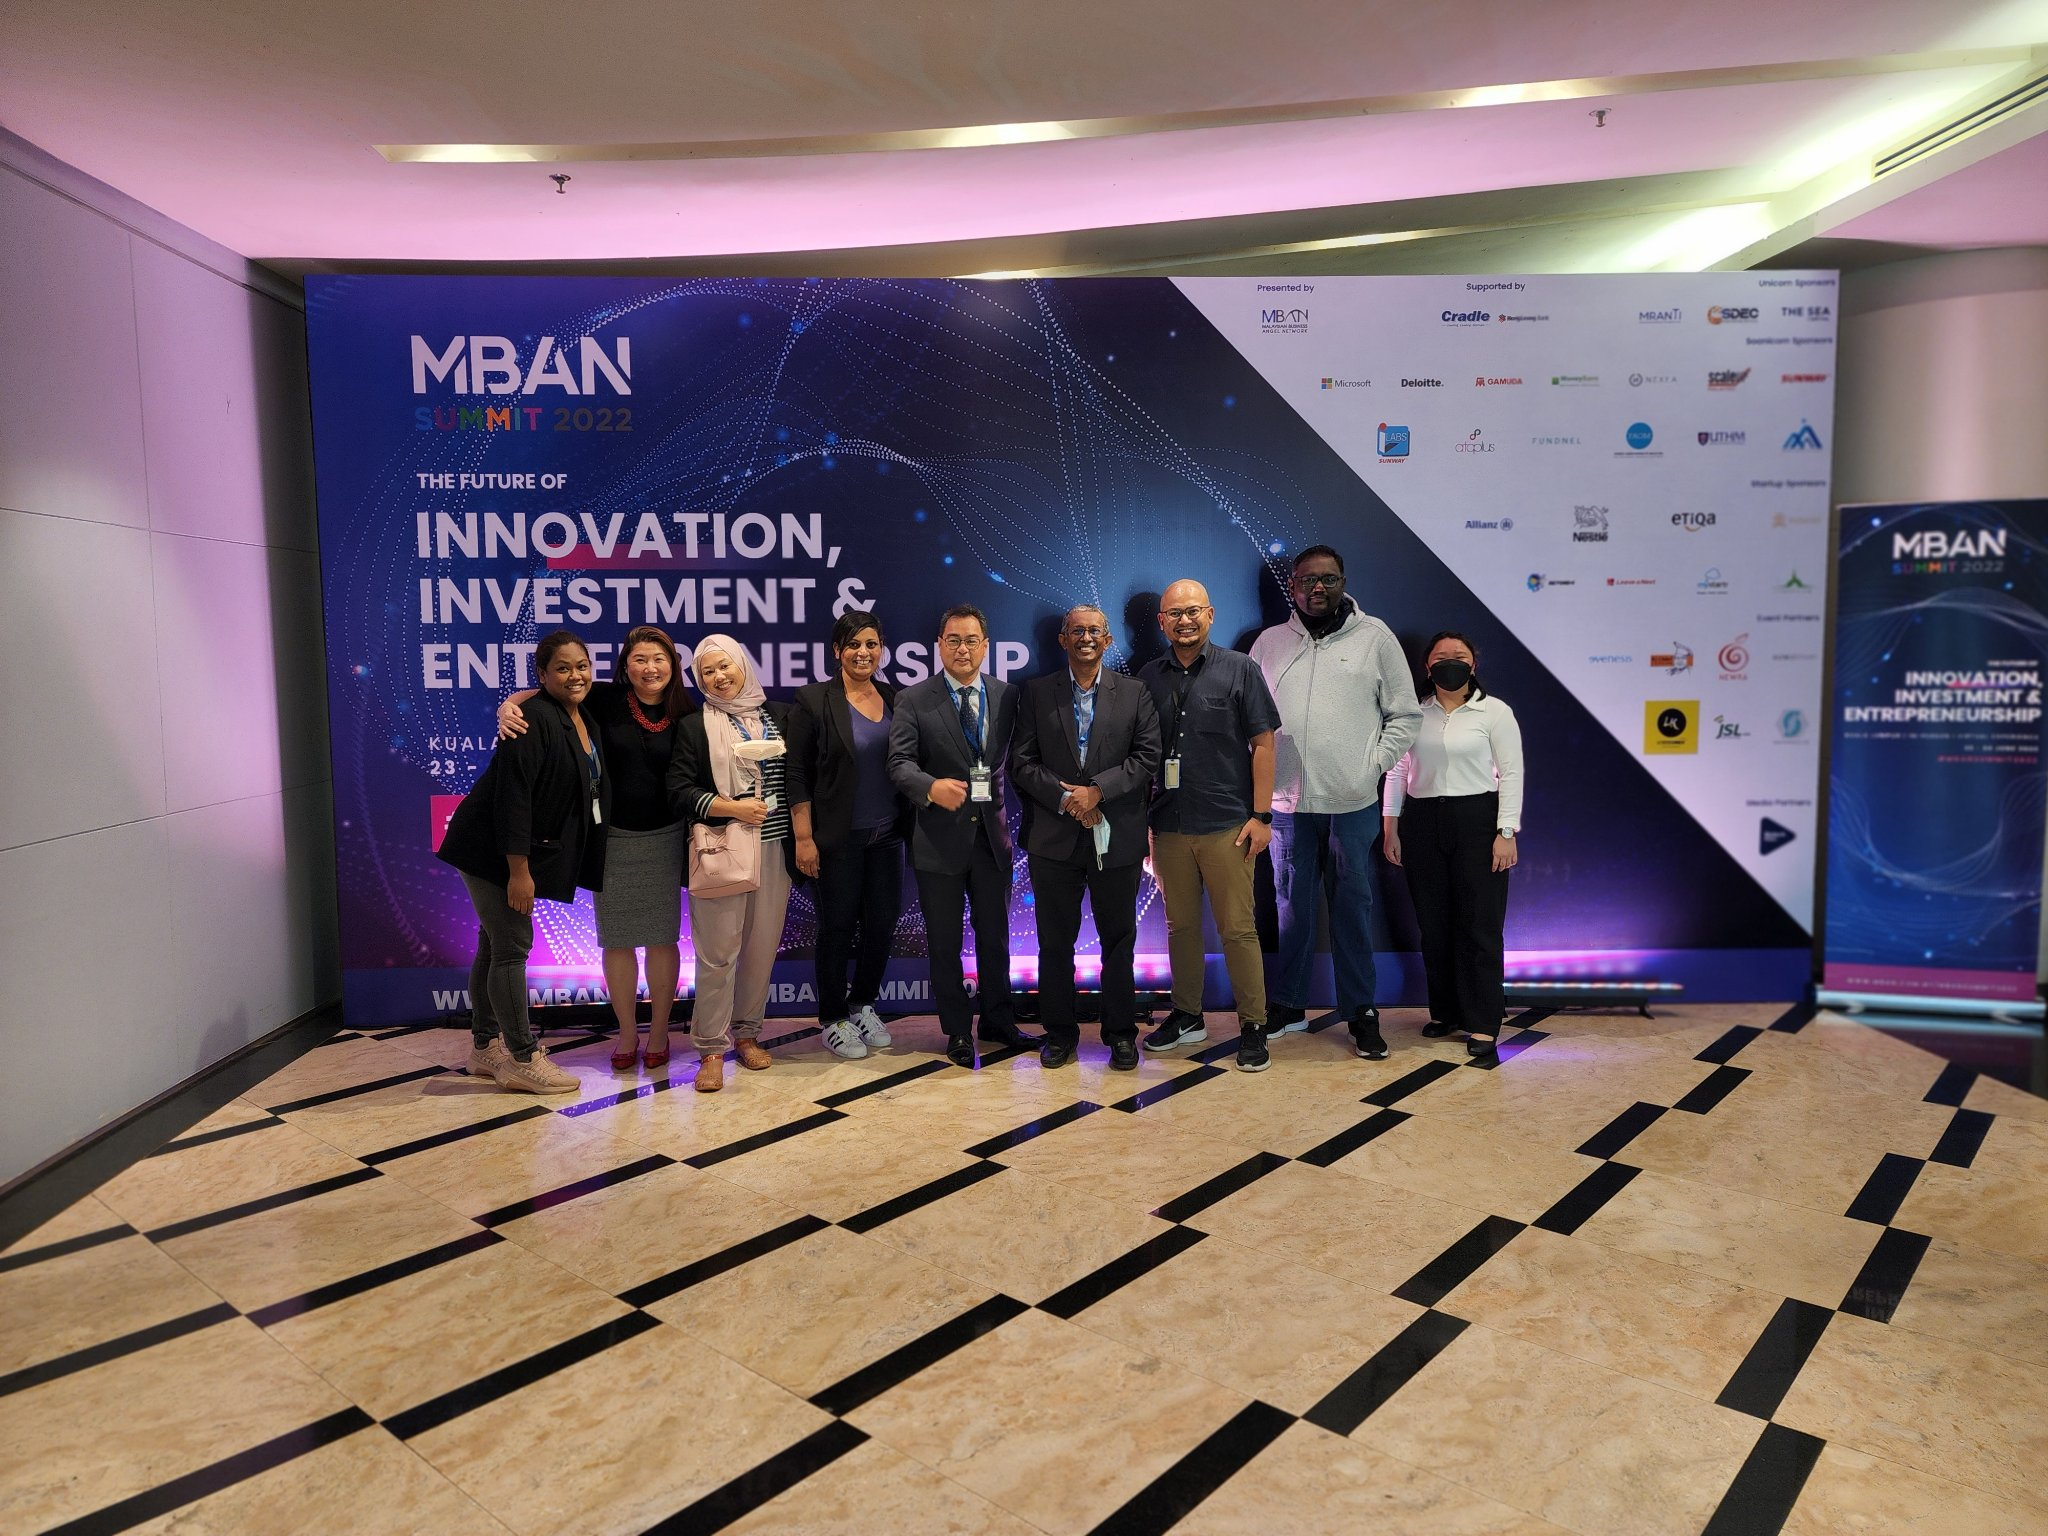 evenesis successful hybrid event the mban summit 2022